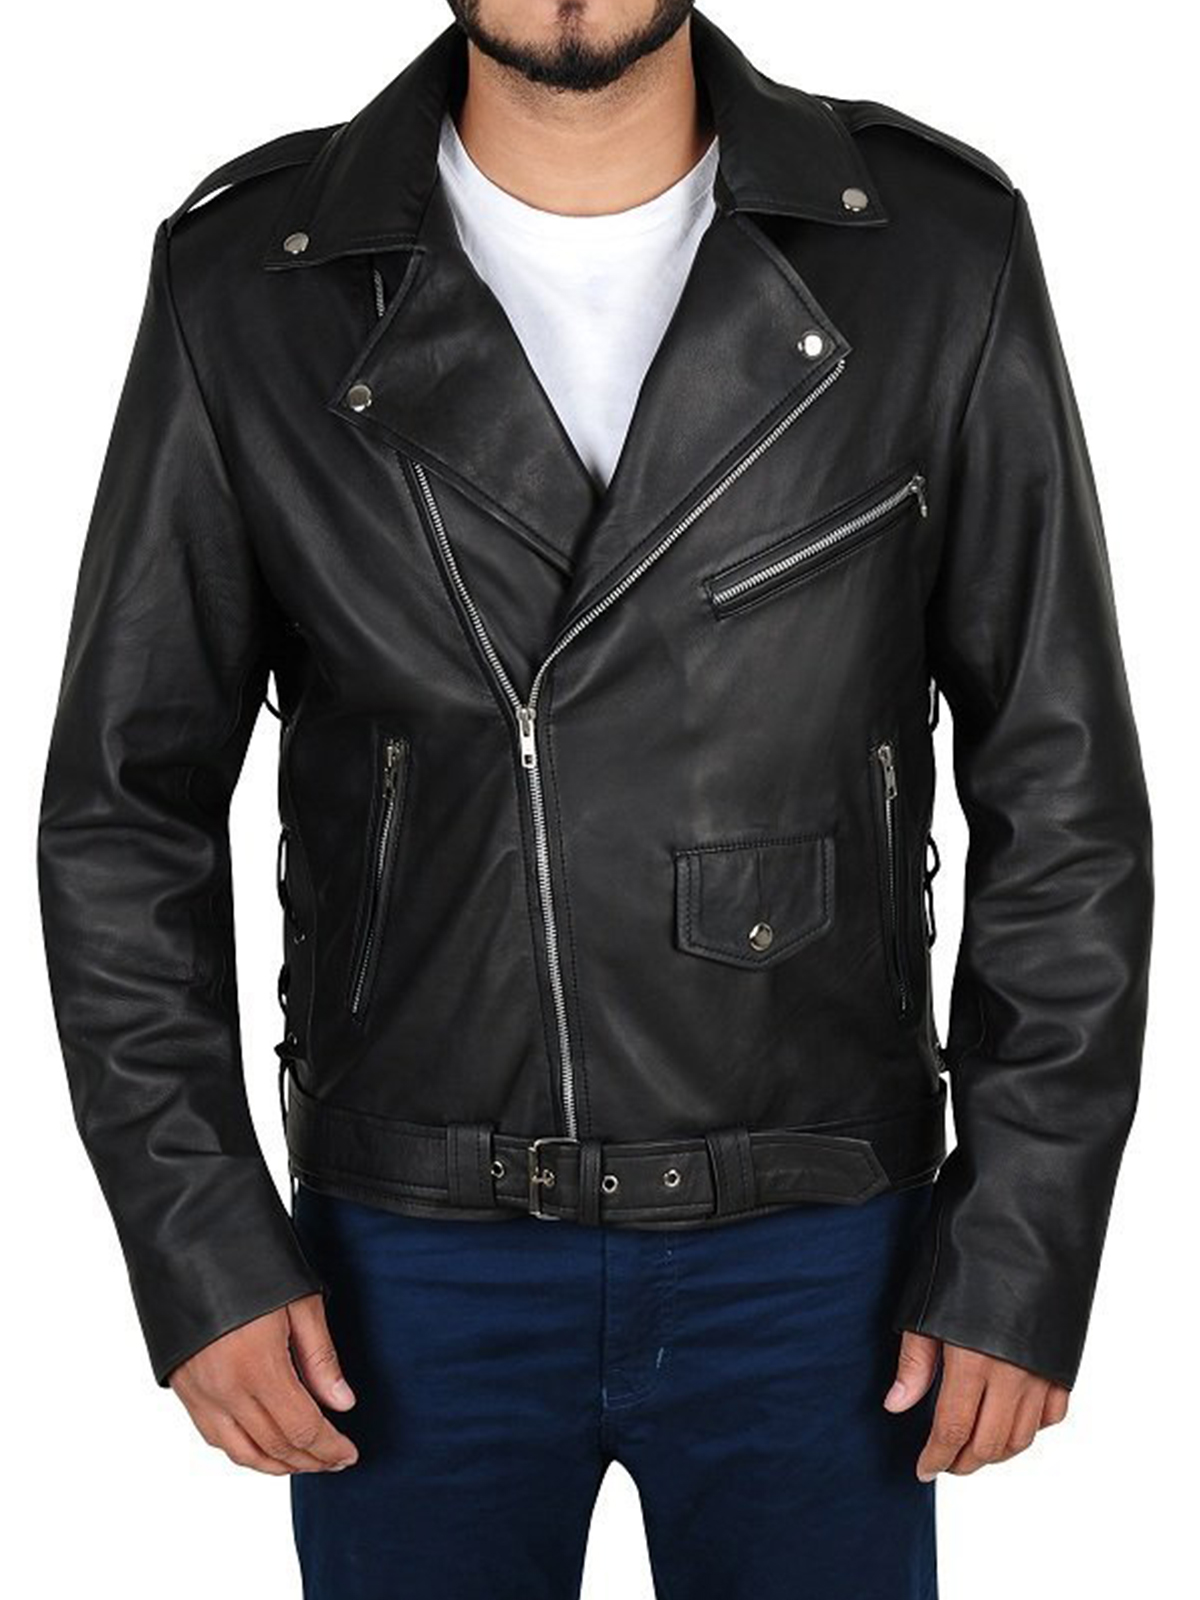 Rapper G-Eazy Brando Biker Style Leather Jacket